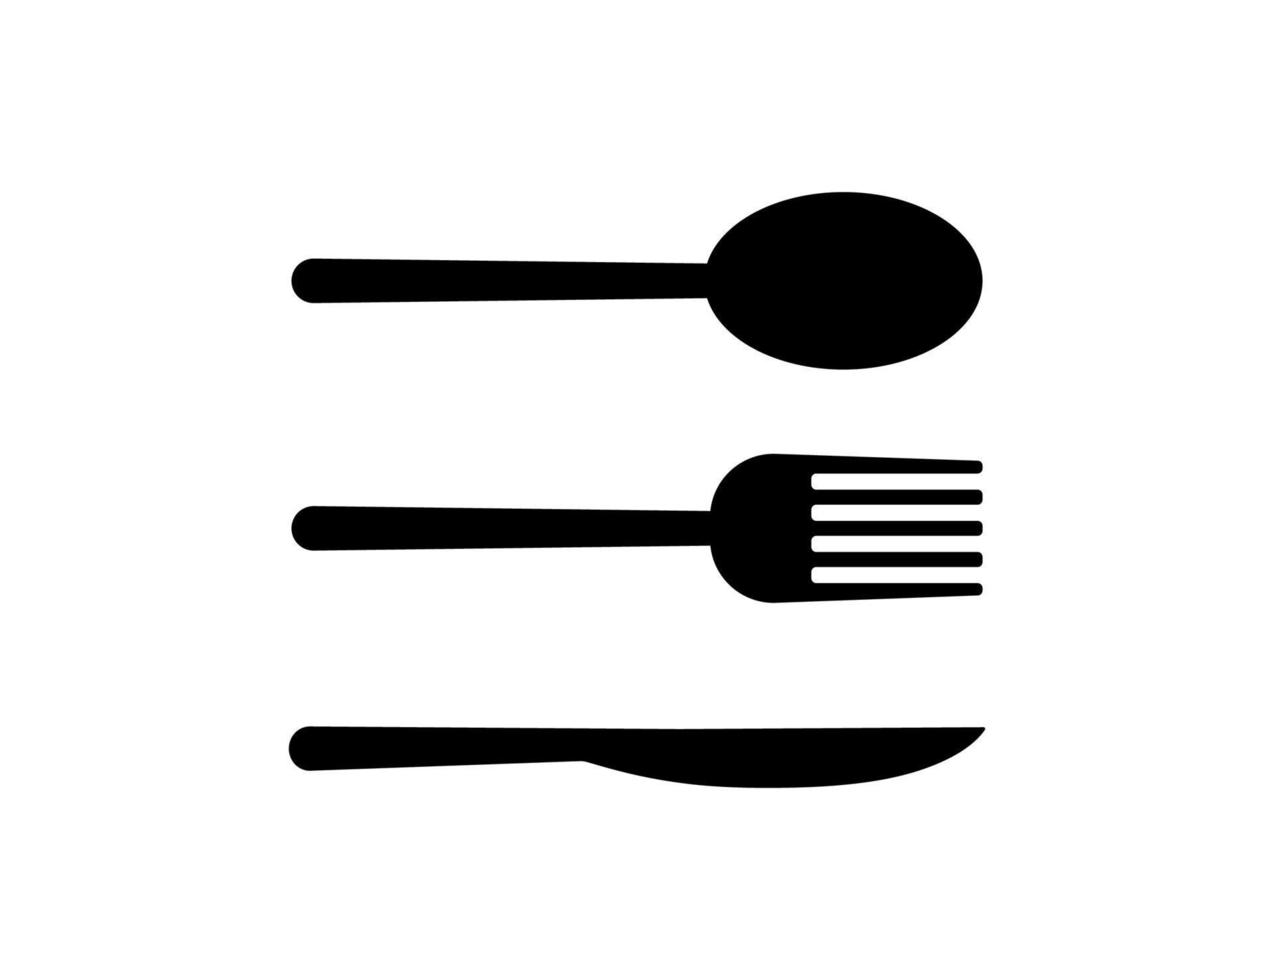 Spoon, fork and knife symbol illustration vector